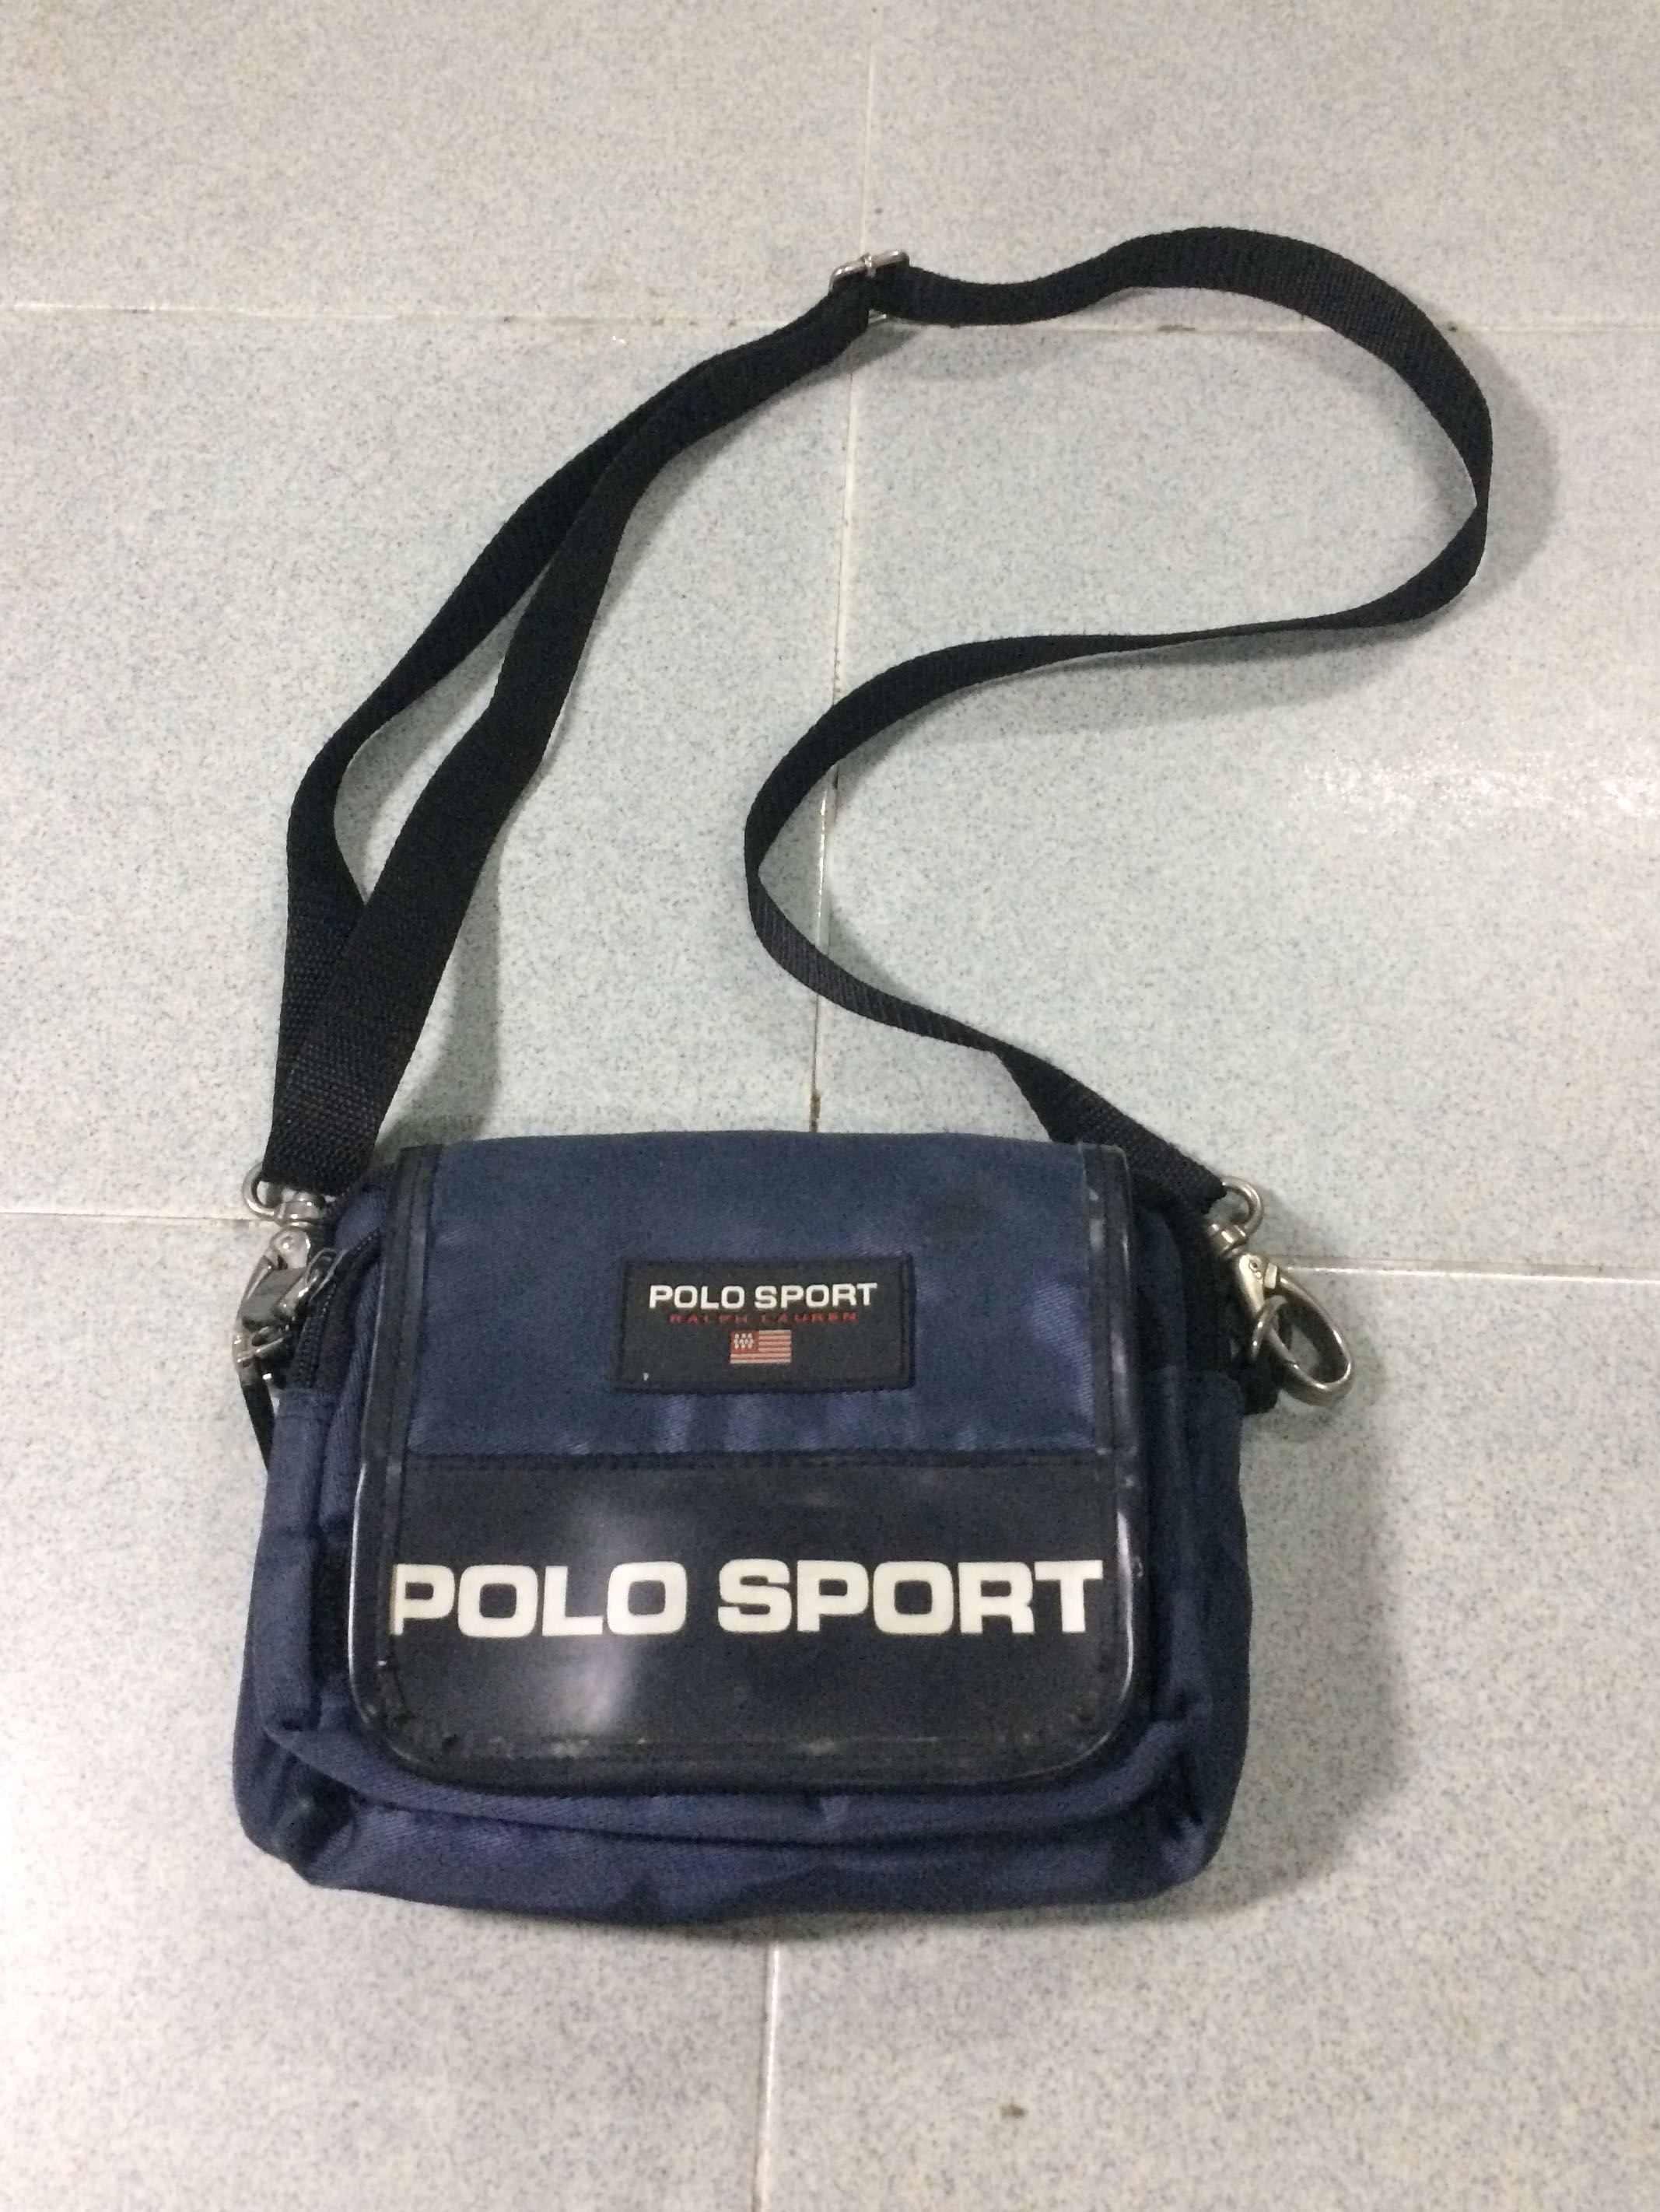 polo sport satchel